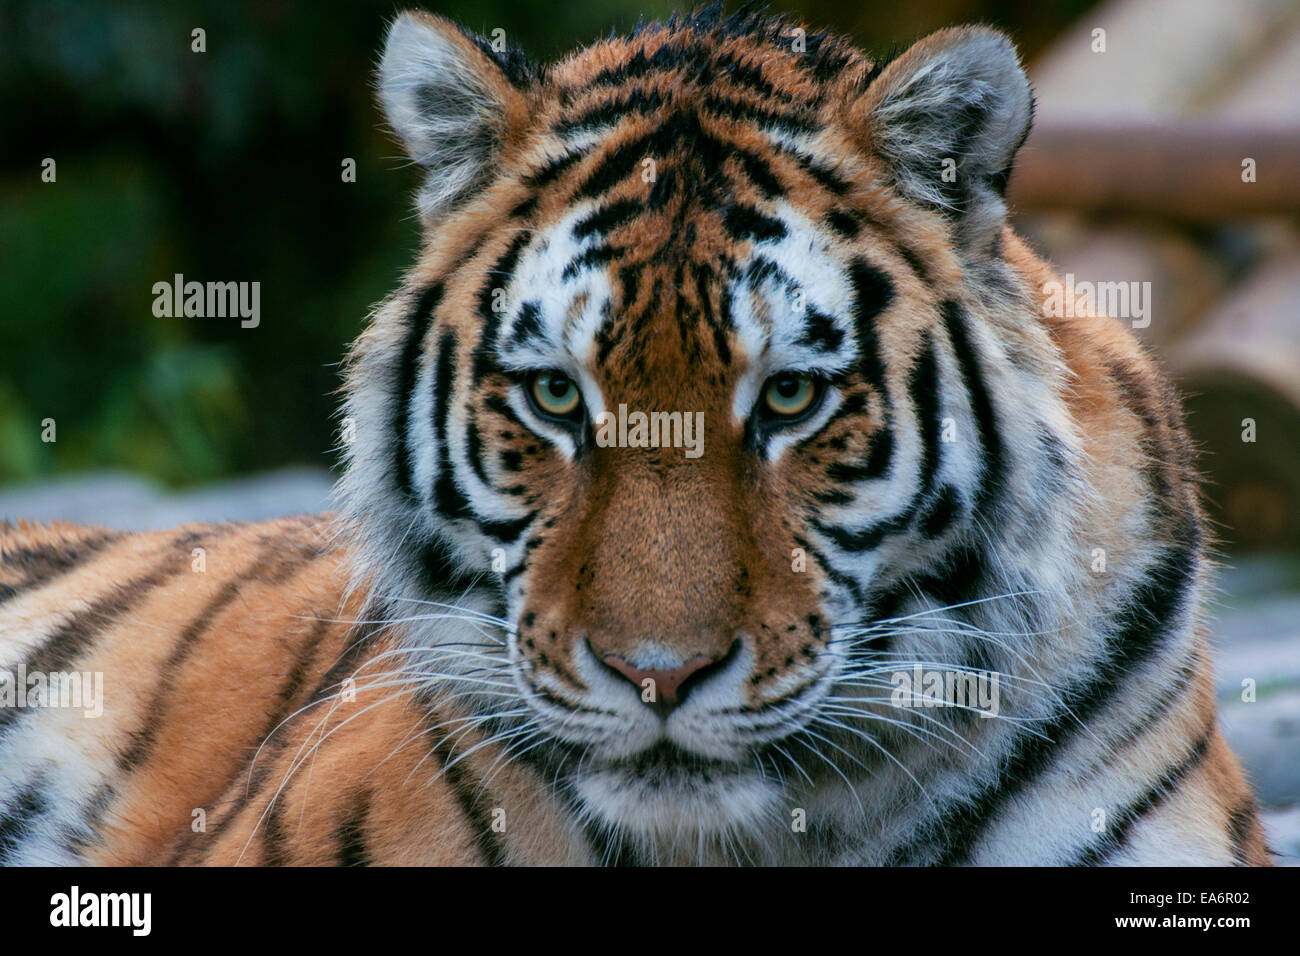 Tiger ear -Fotos und -Bildmaterial in hoher Auflösung – Alamy